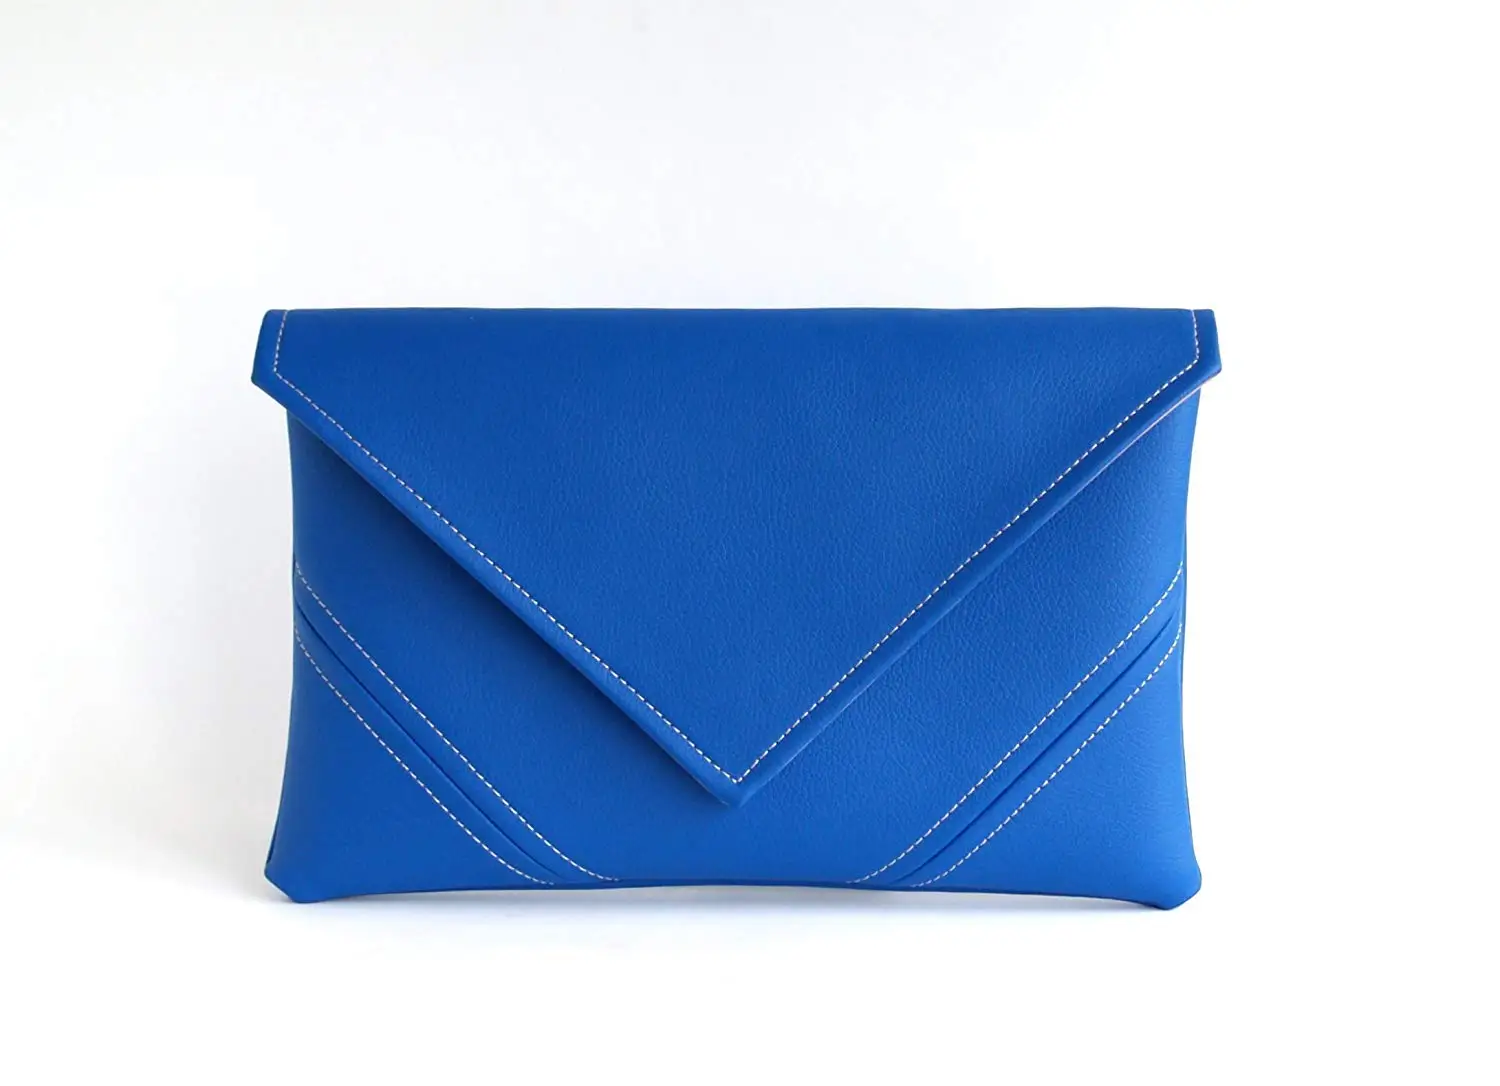 pale blue suede clutch bag